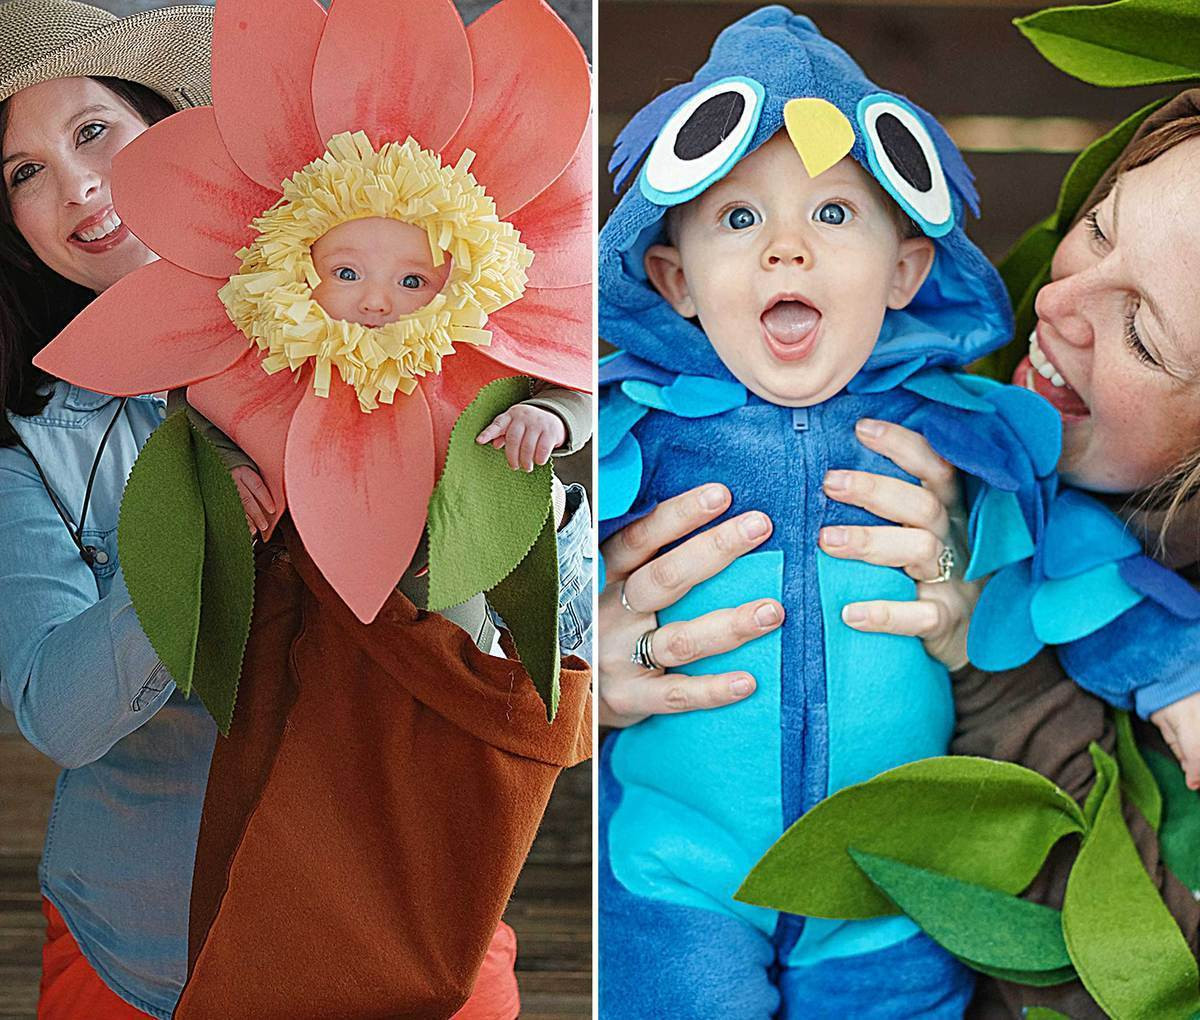 Best ideas about DIY Infant Halloween Costume
. Save or Pin DIY Baby and Infant Halloween Costume Ideas by Fiskars Now.